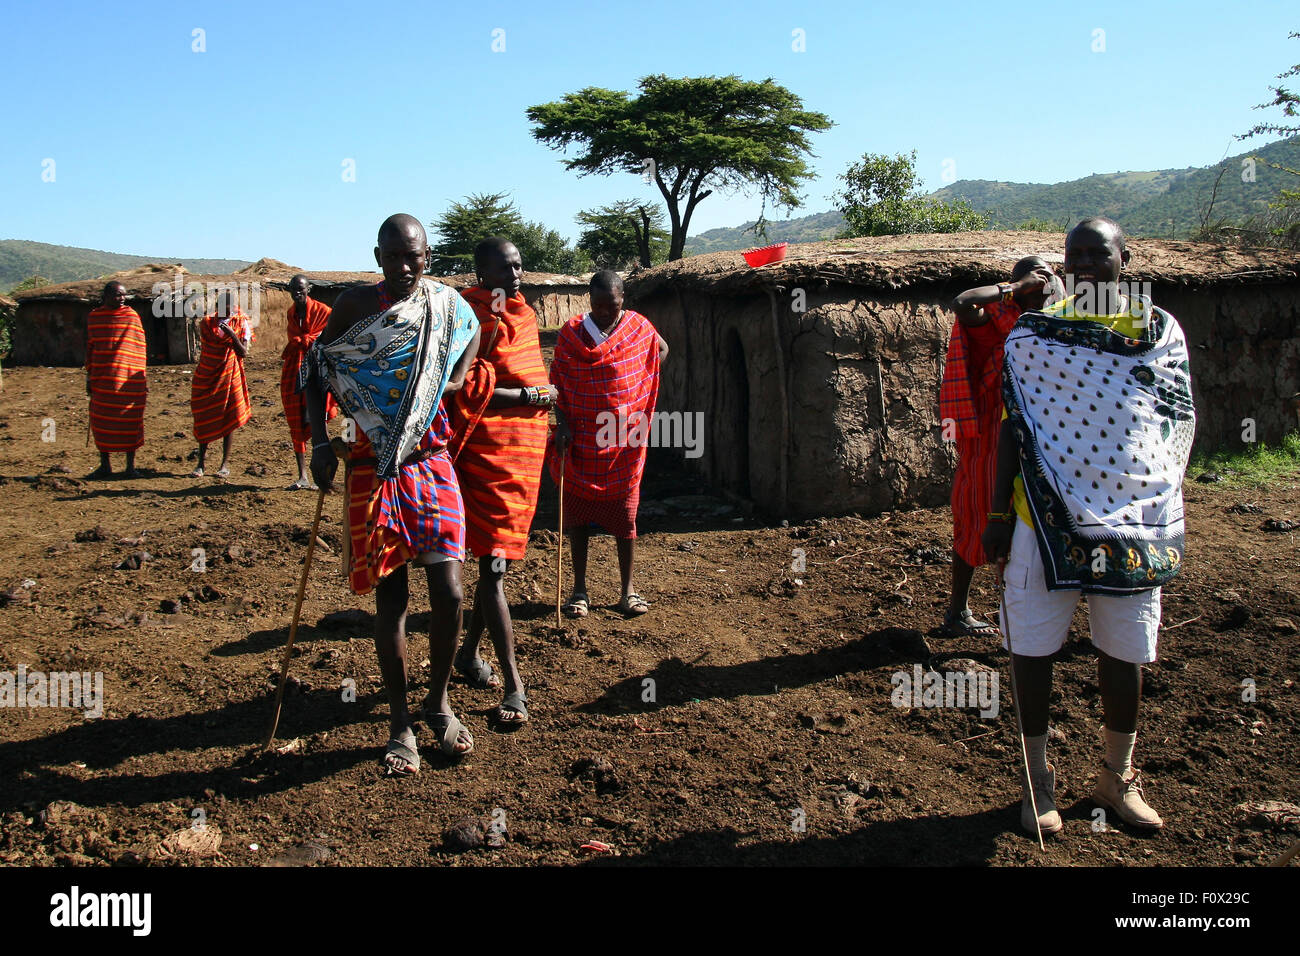 Some members of Masai tribe in Kenya Stock Photo